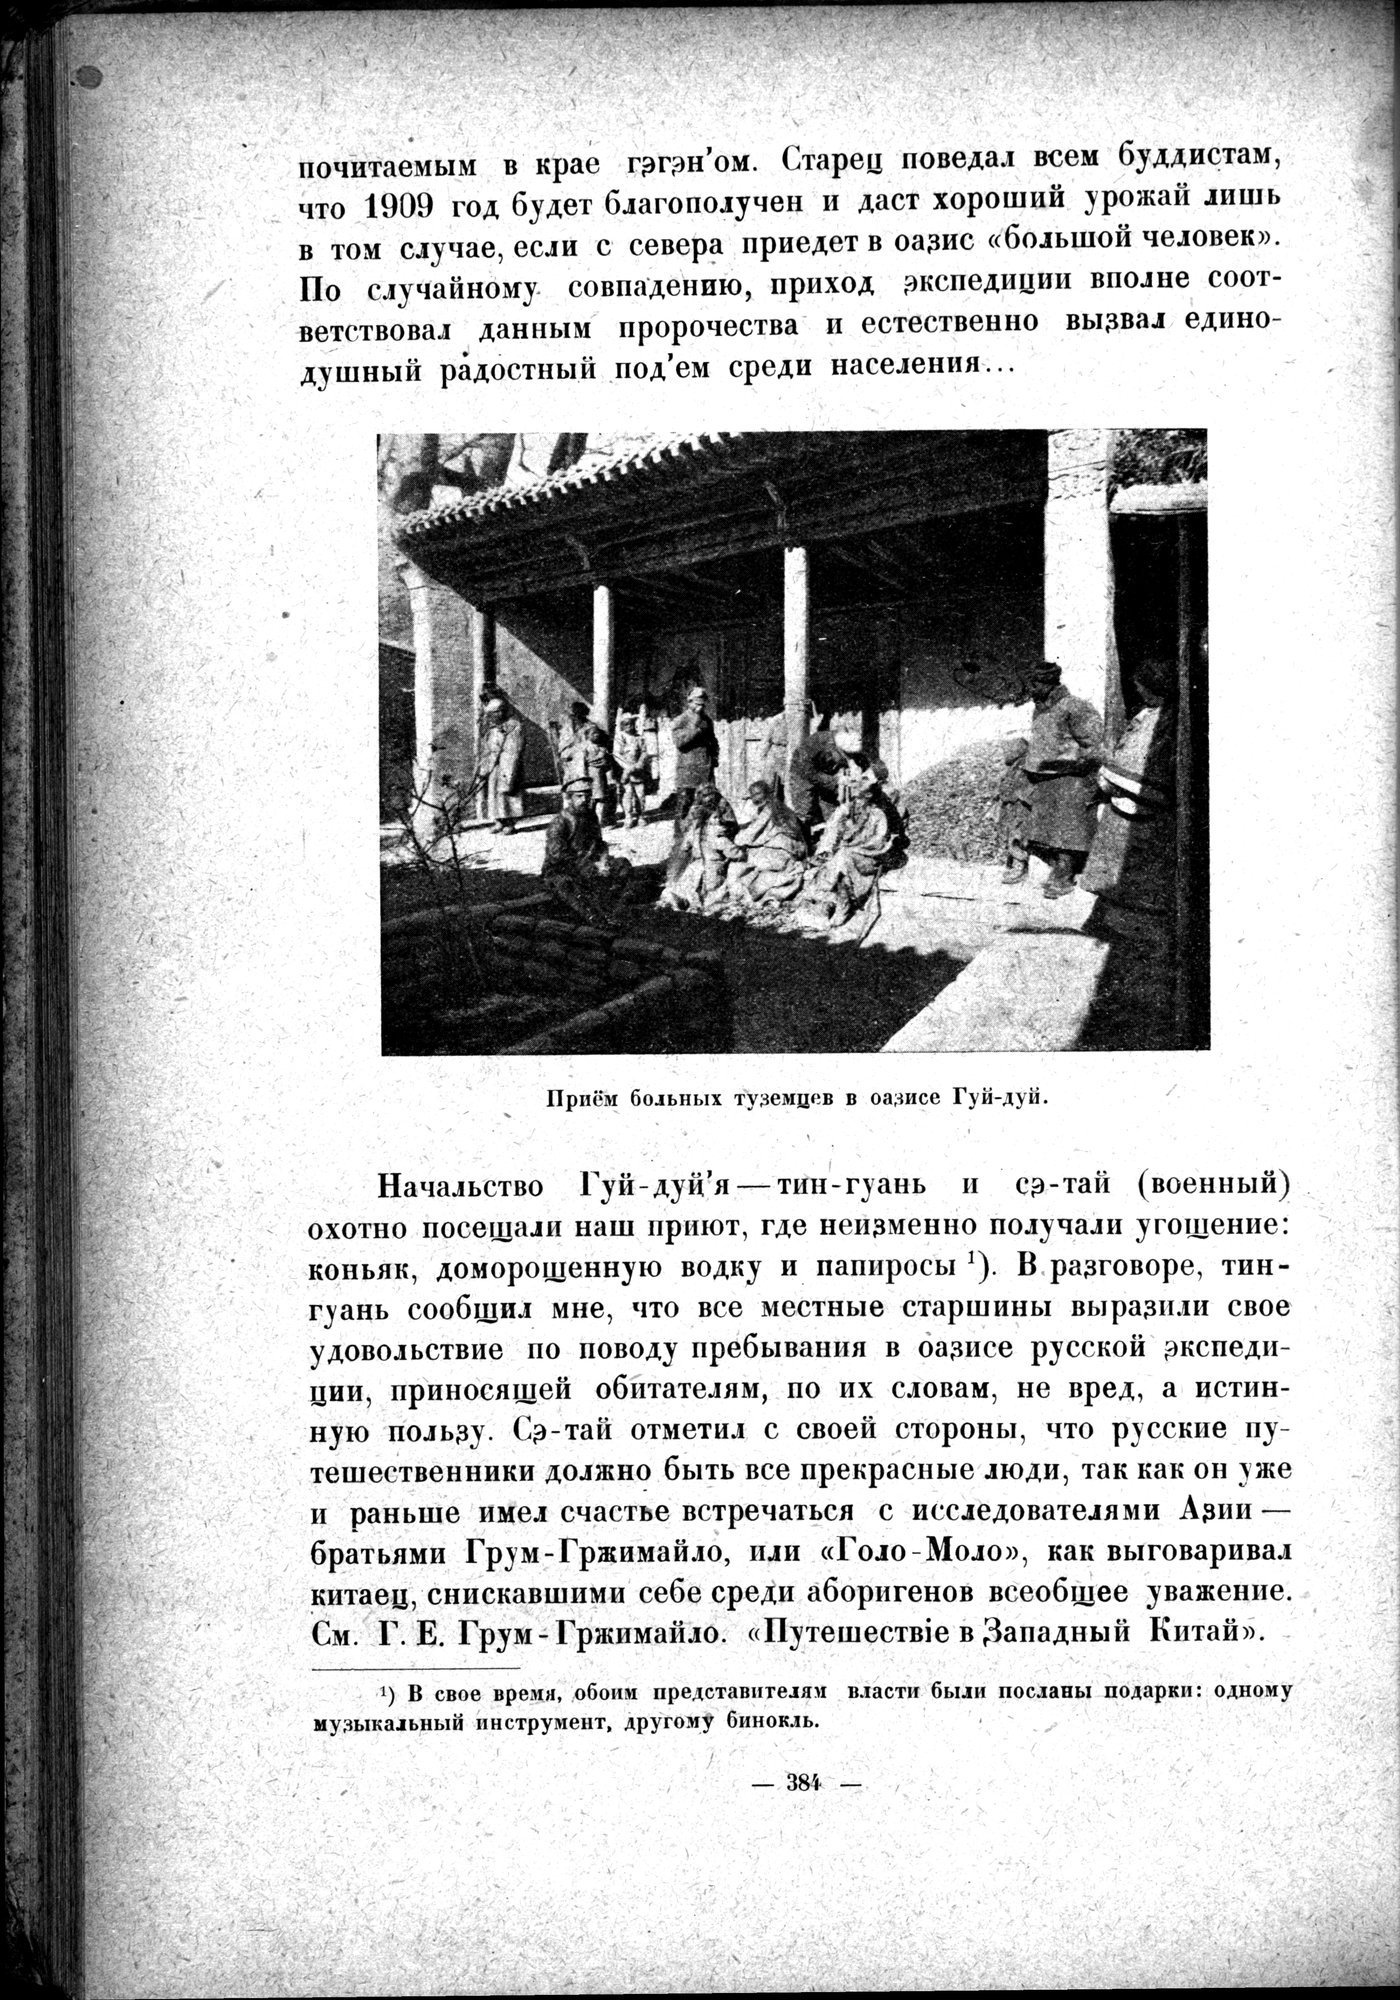 Mongoliya i Amdo i mertby gorod Khara-Khoto : vol.1 / Page 438 (Grayscale High Resolution Image)